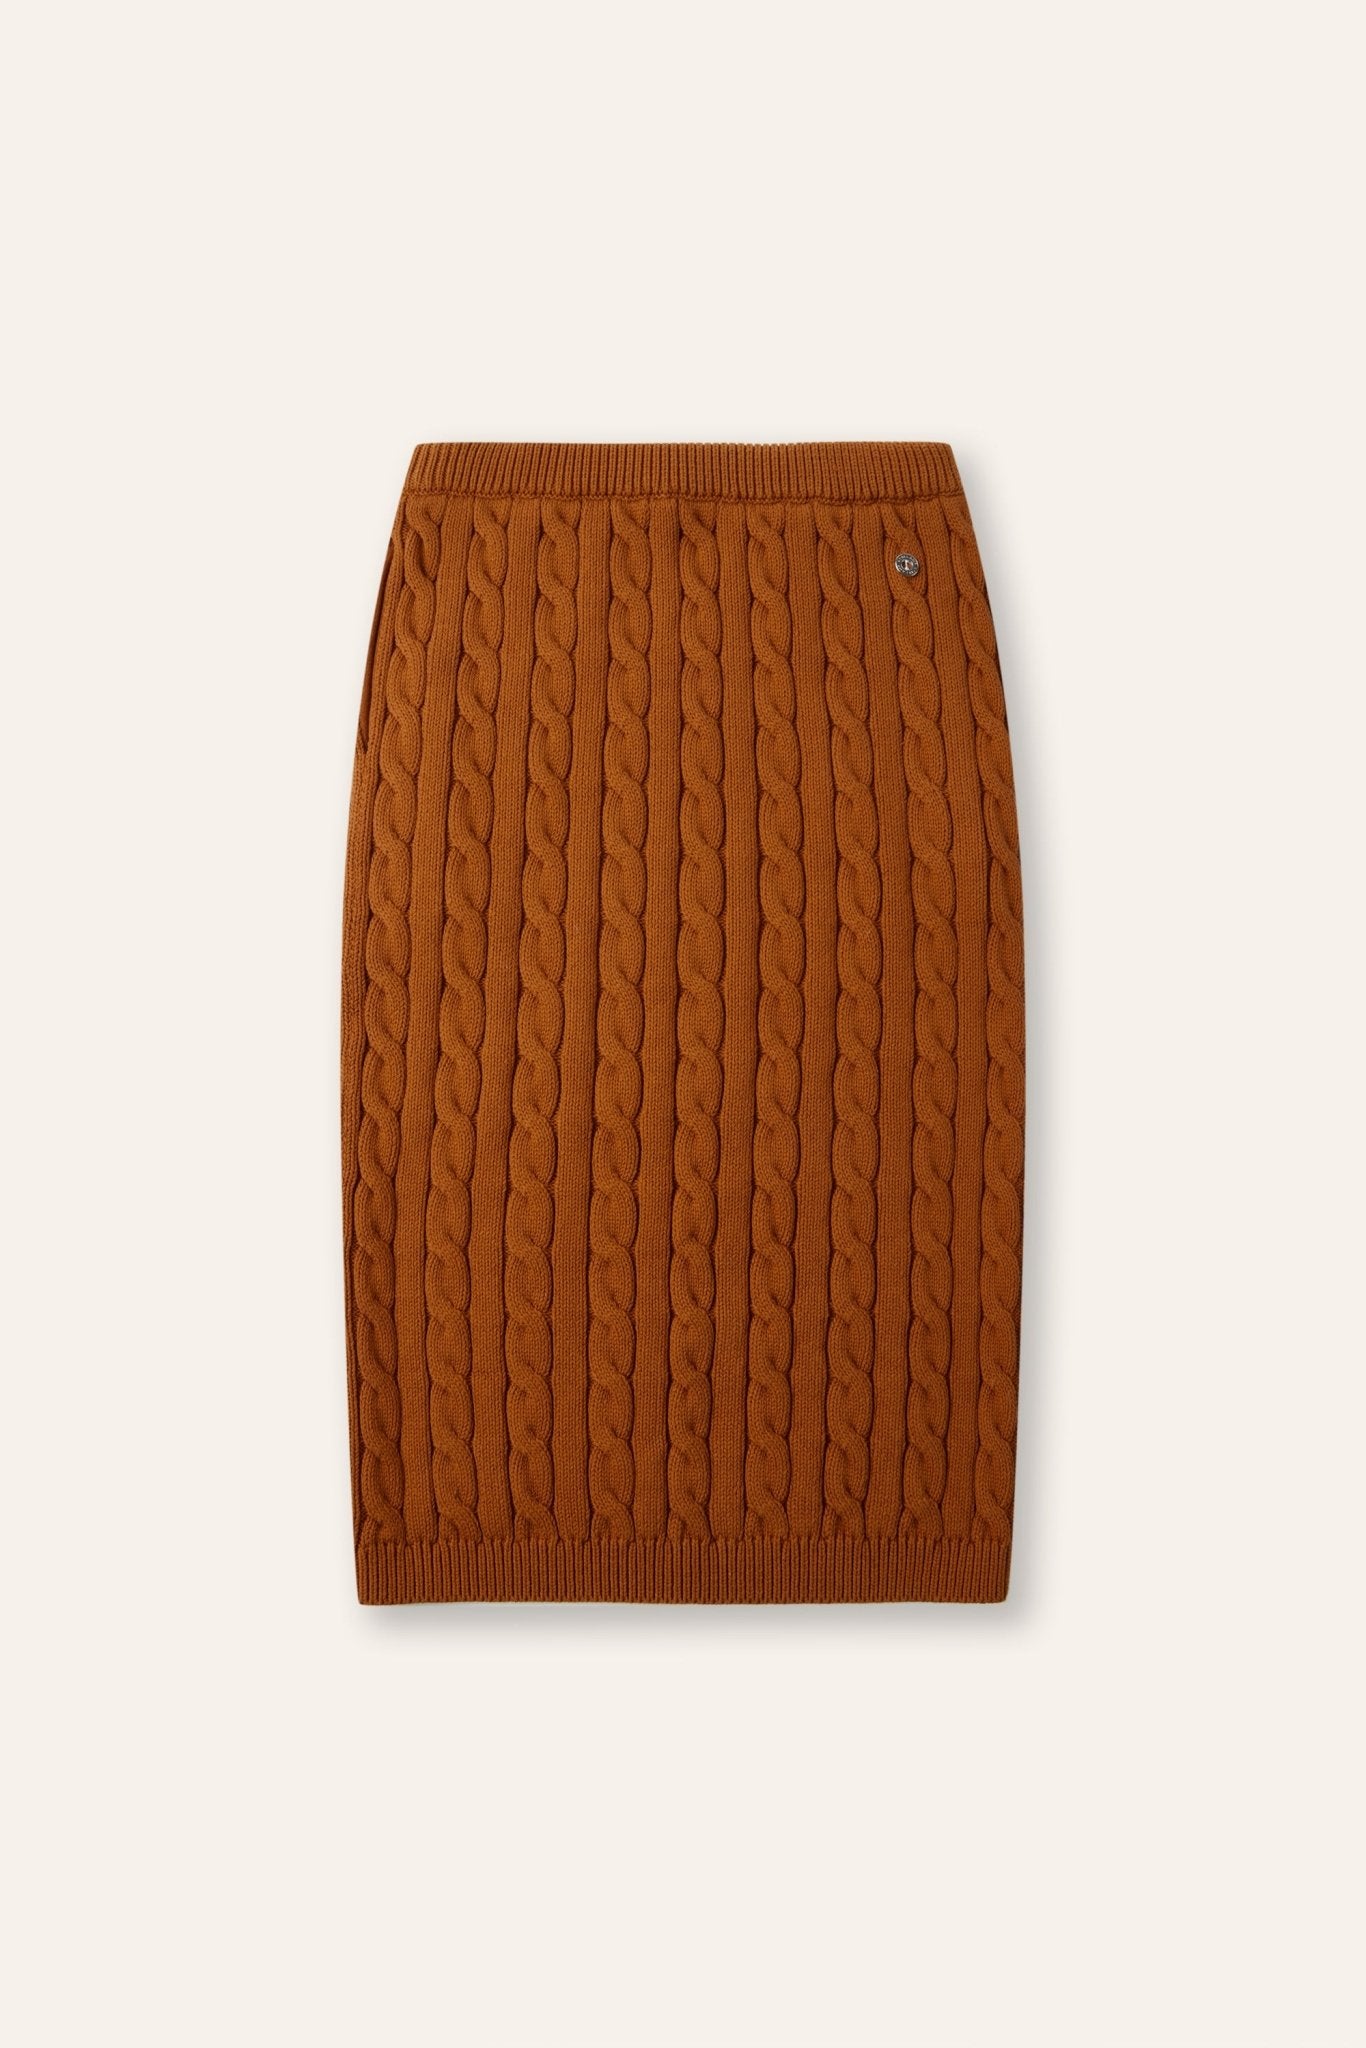 CM cotton cable-knit skirt (Caramel) - STELLAM